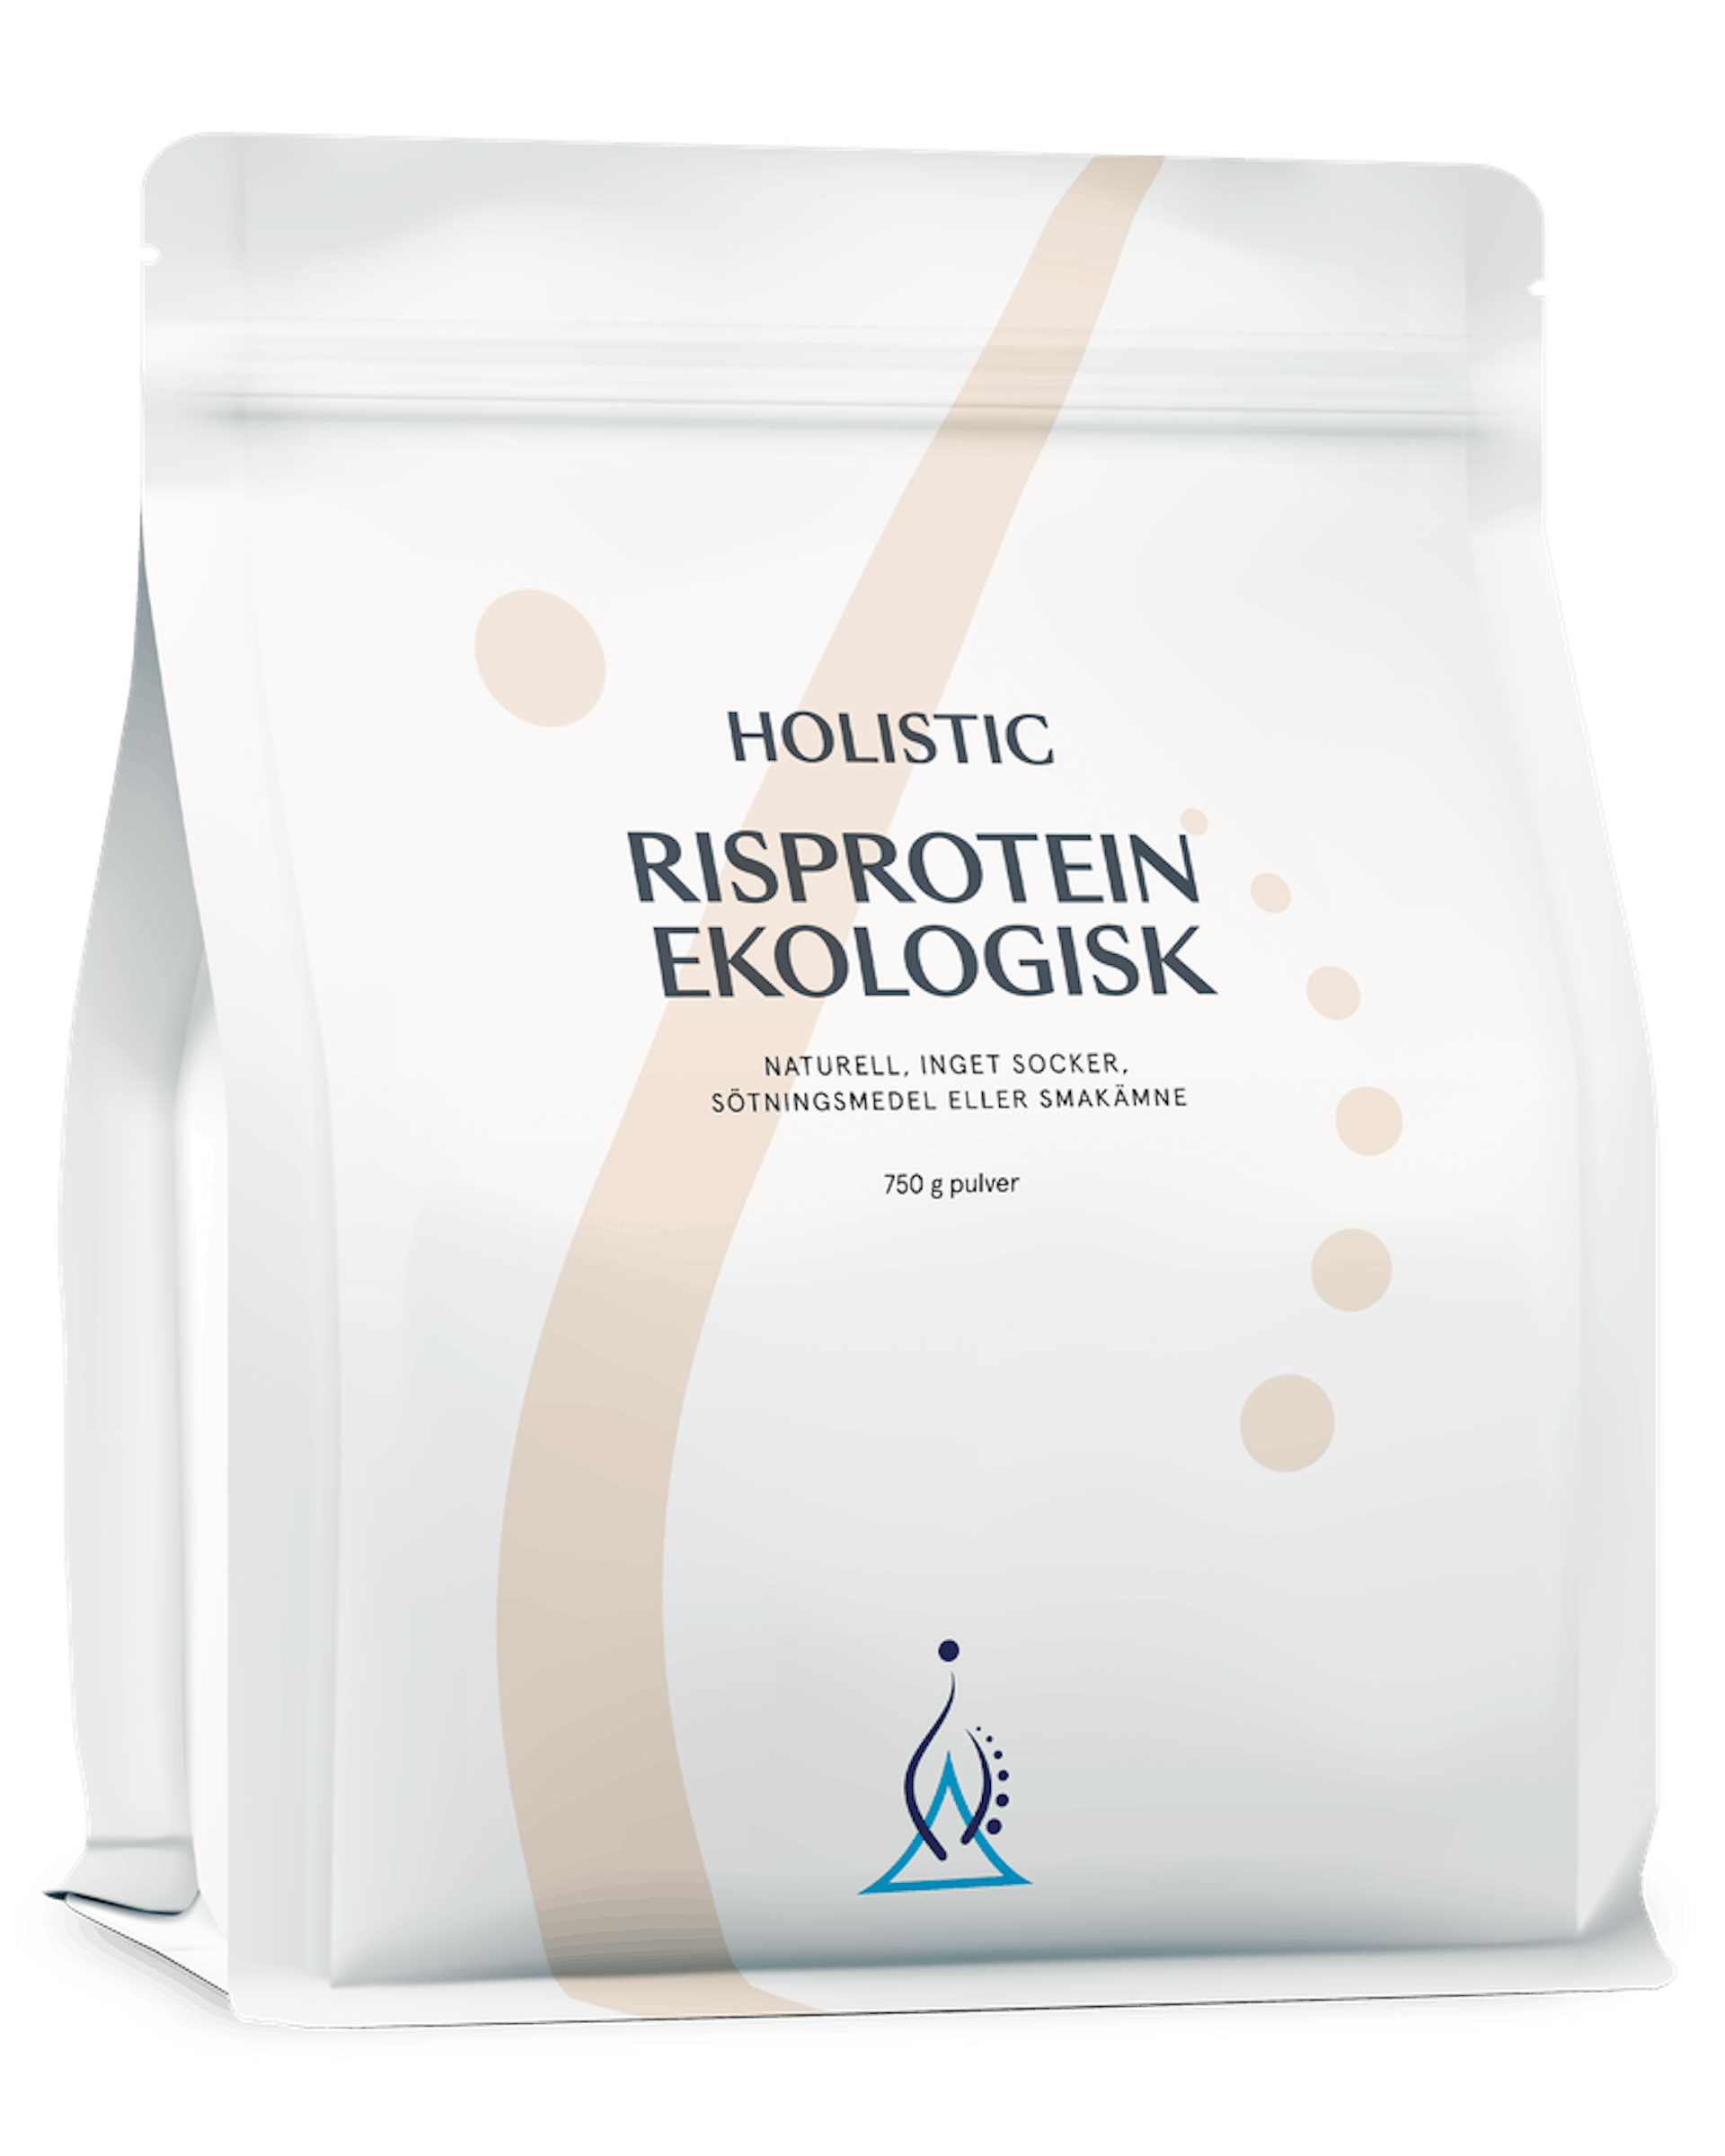 Risprotein ekologisk, 750 g